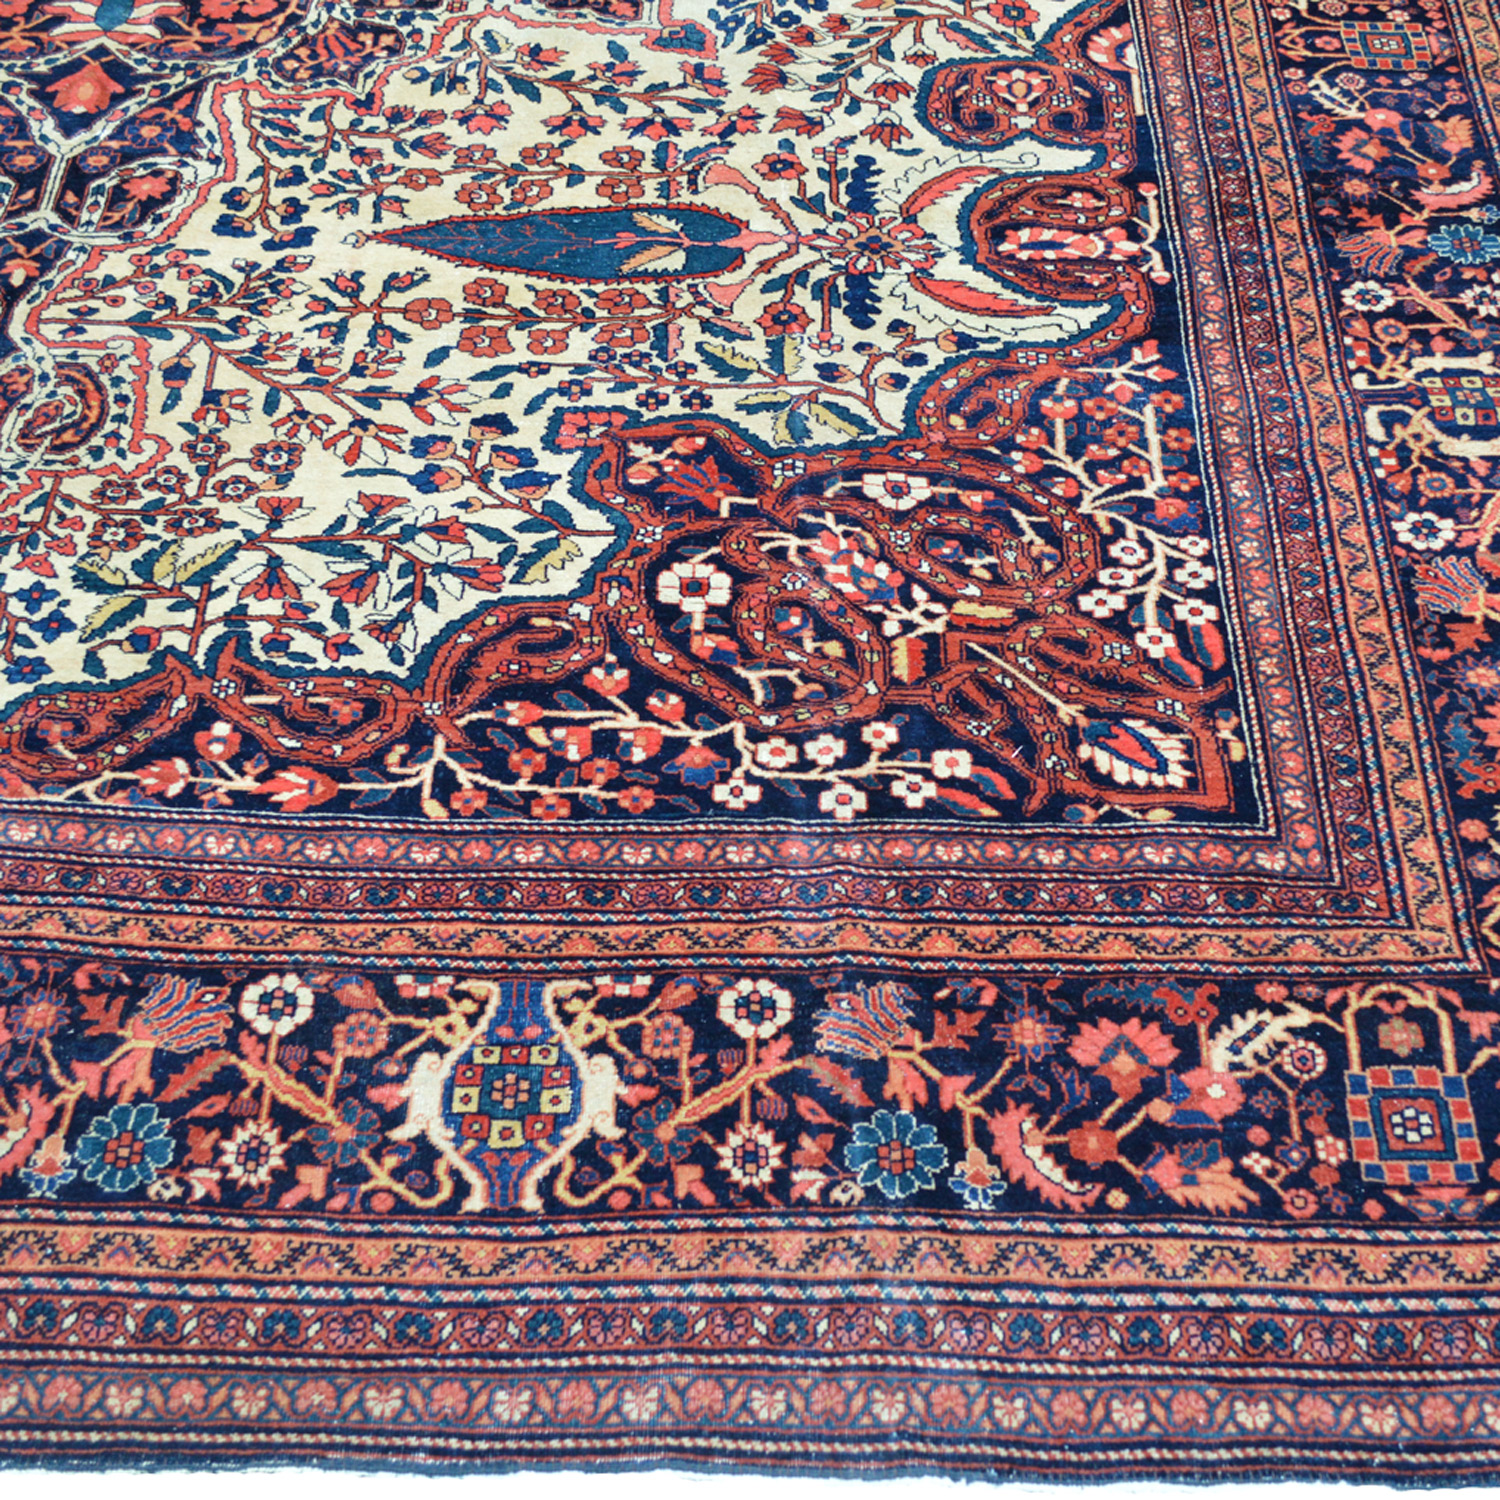 Corner spandrel detail from an antique Persian Fereghan Sarouk carpet